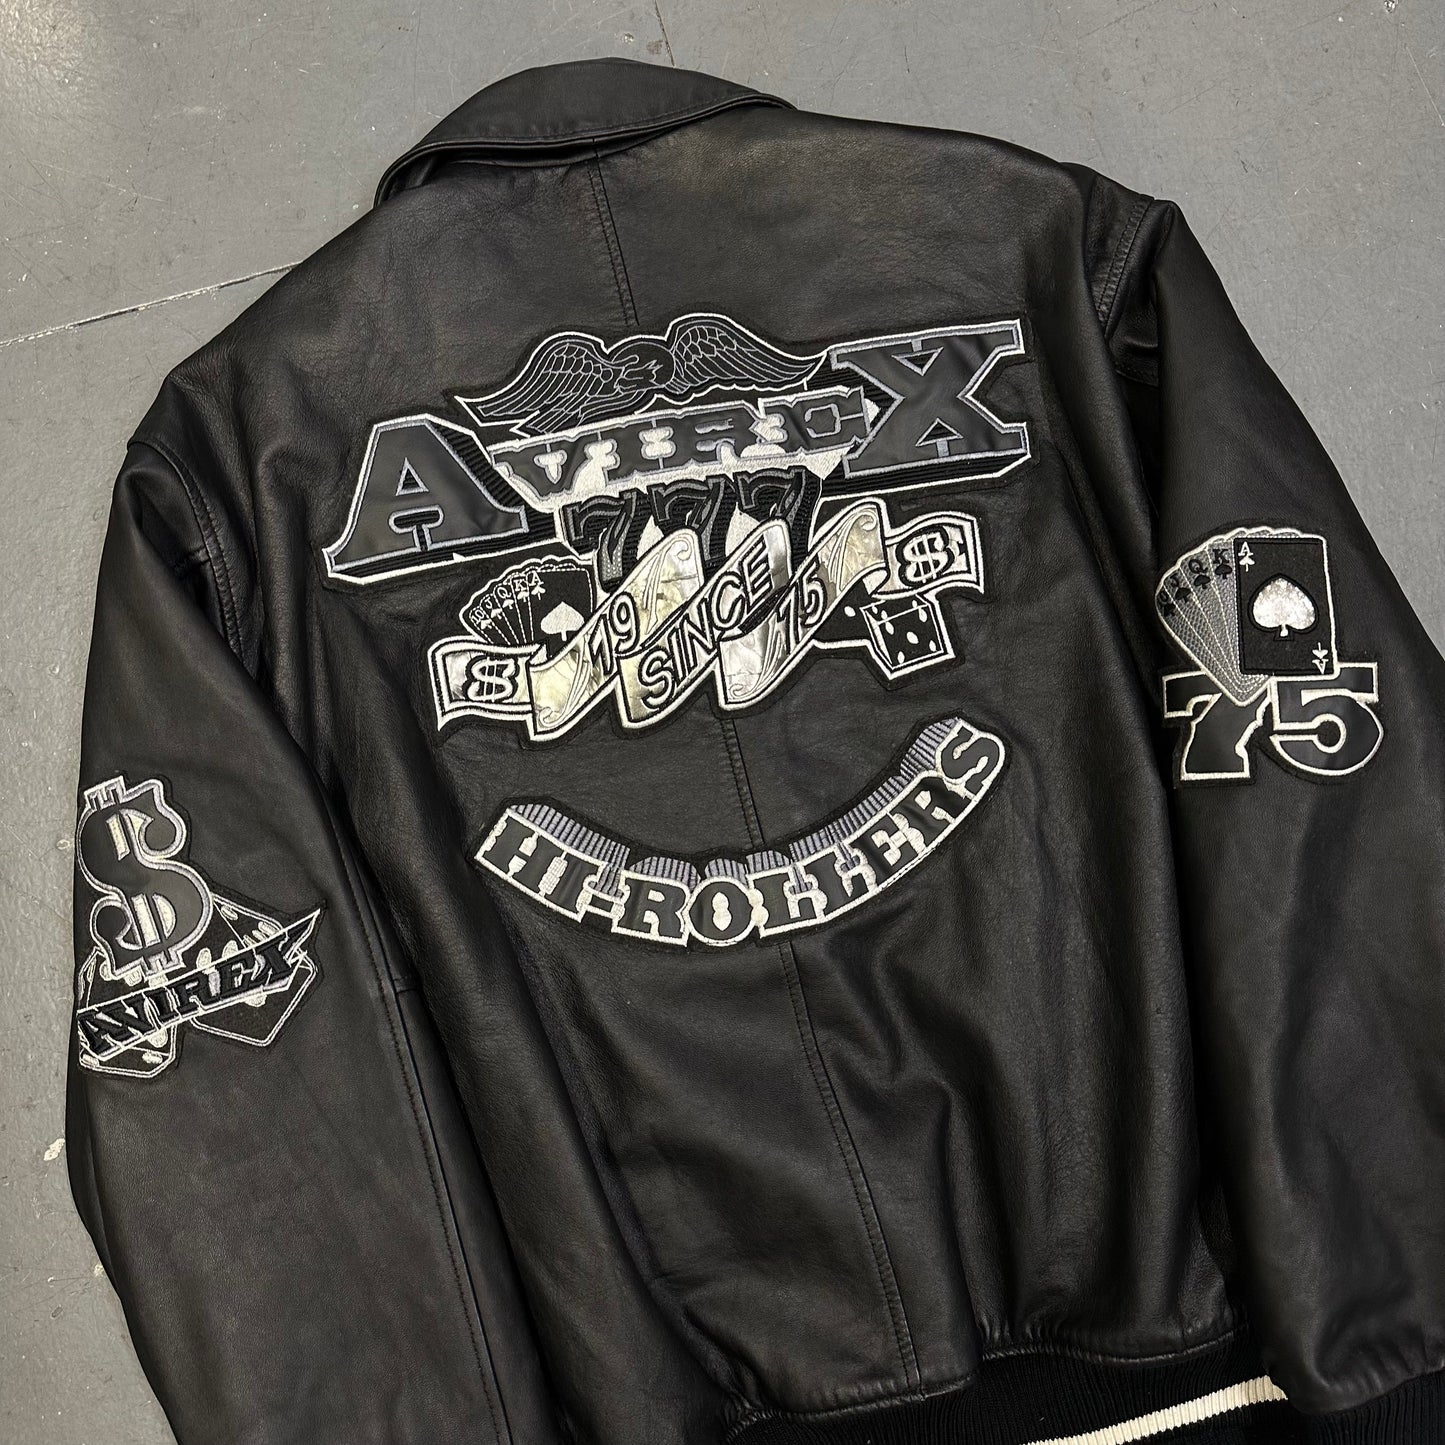 Avirex Hi-Rollers Casino Leather Jacket In Black ( L )